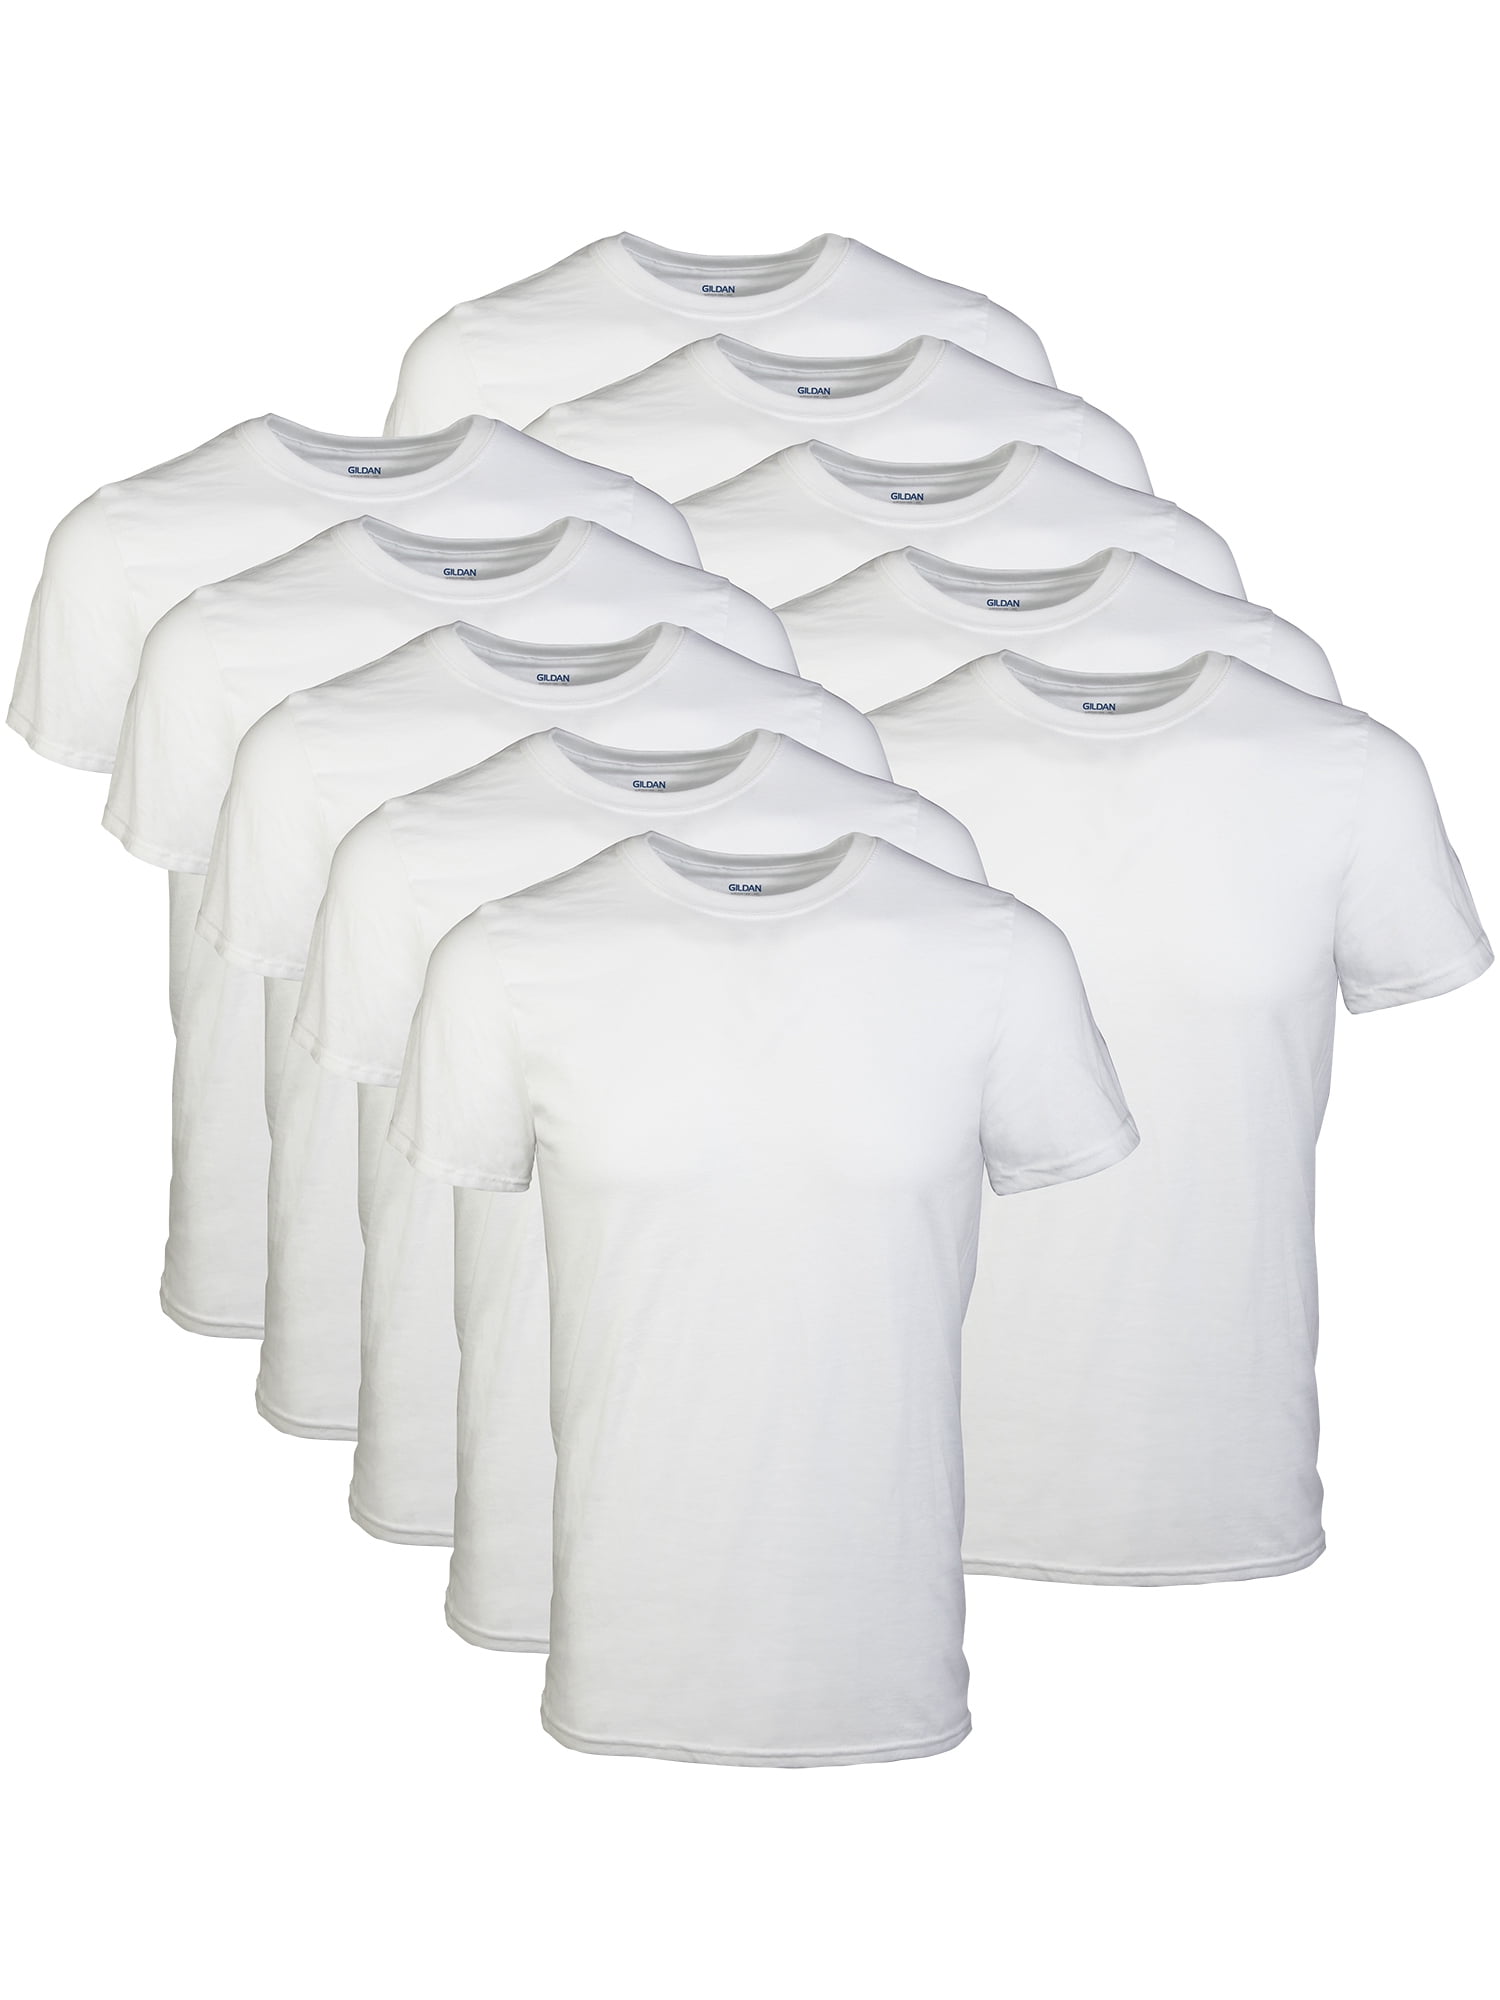 Gildan Men's Tag Free, T-shirts, White, 12-Pack, Sizes - Walmart.com